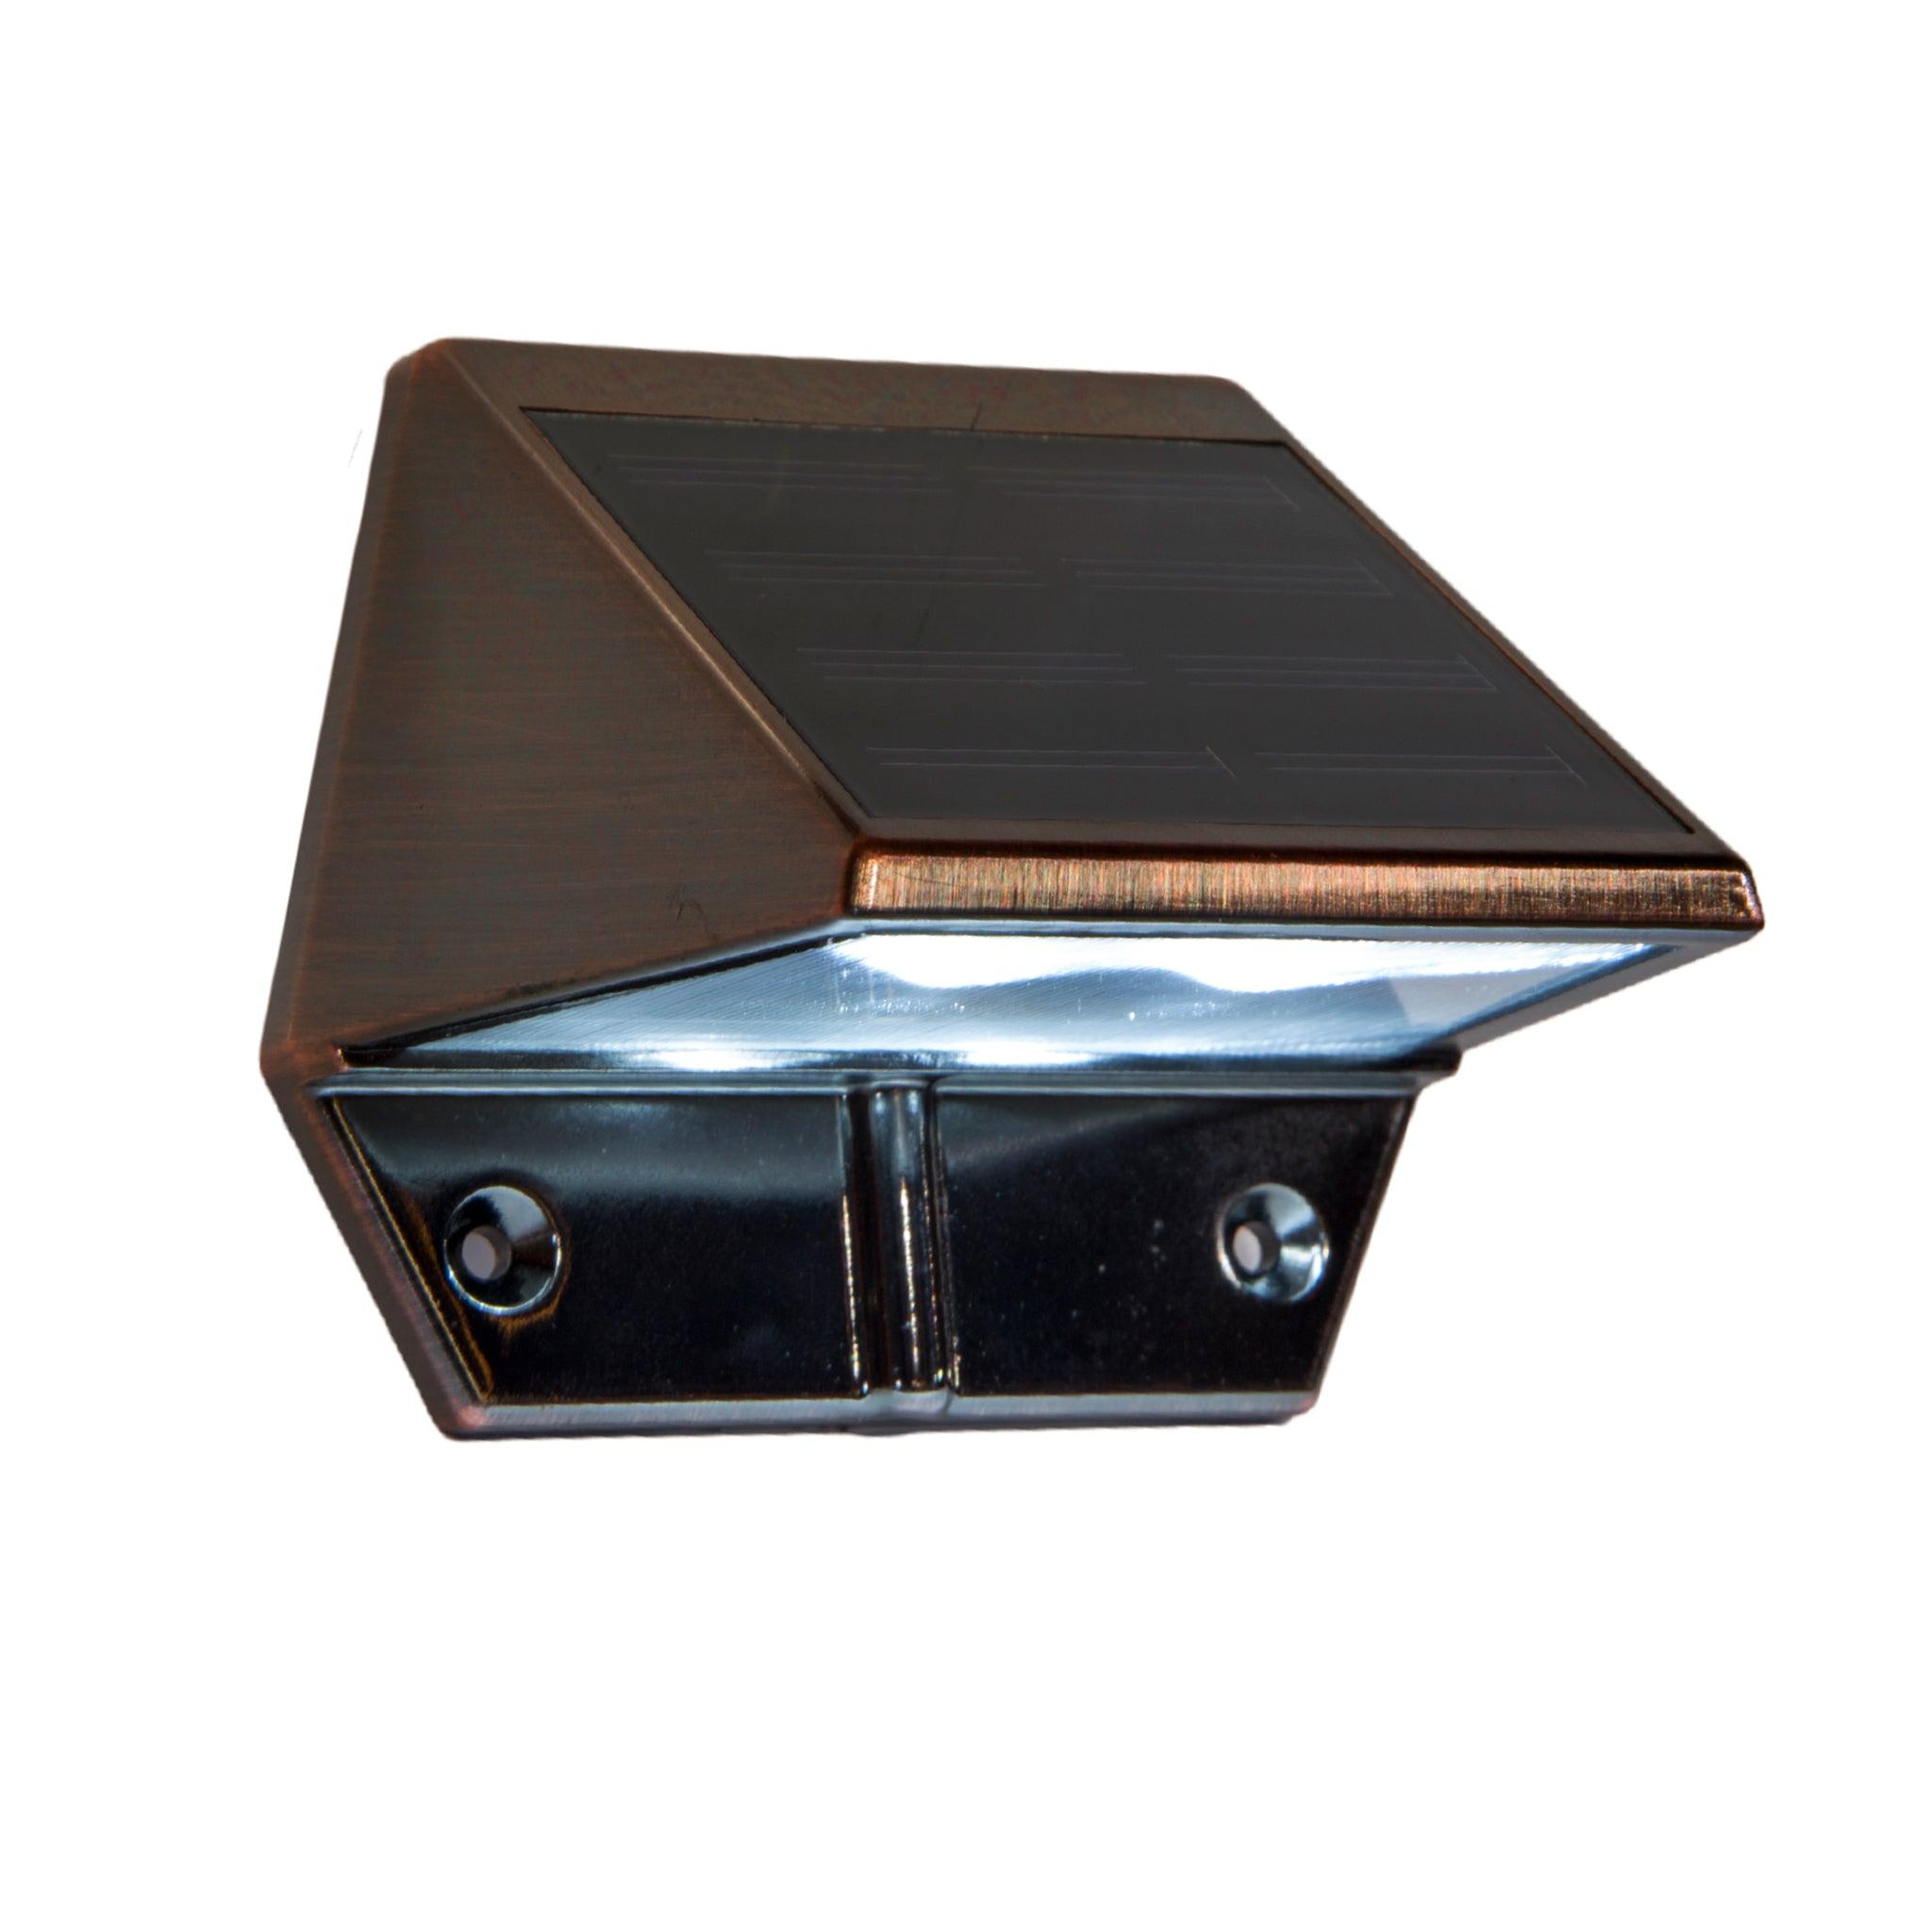 Copper Plated Deck & Wall Light - Classy Caps Mfg. Inc.